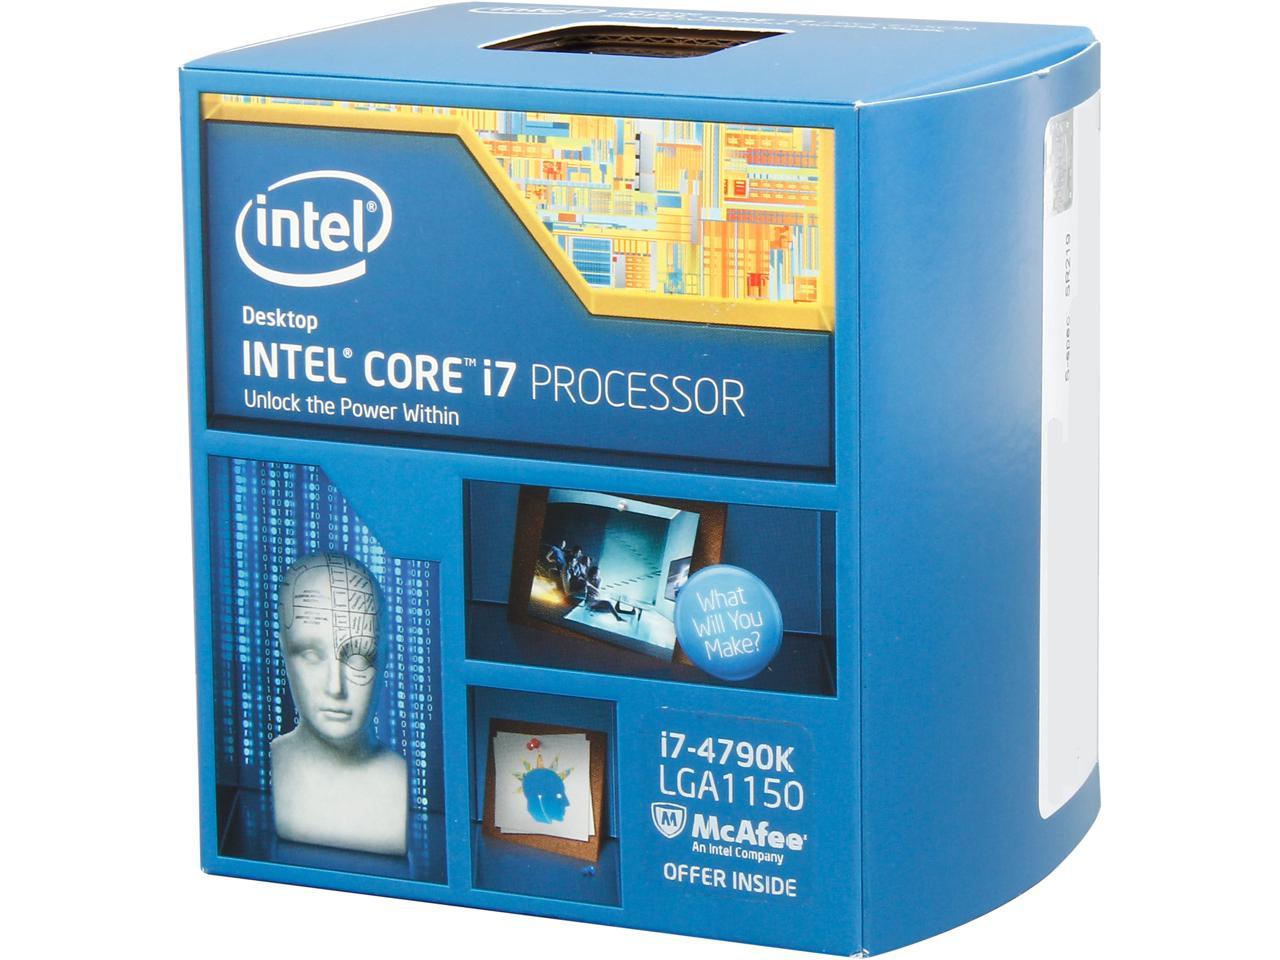 PC/タブレット PCパーツ Intel Core i7-4790K - Core i7 4th Gen Devil's Canyon Quad-Core 4.0 GHz LGA  1150 88W Intel HD Graphics 4600 Desktop Processor - BX80646I74790K